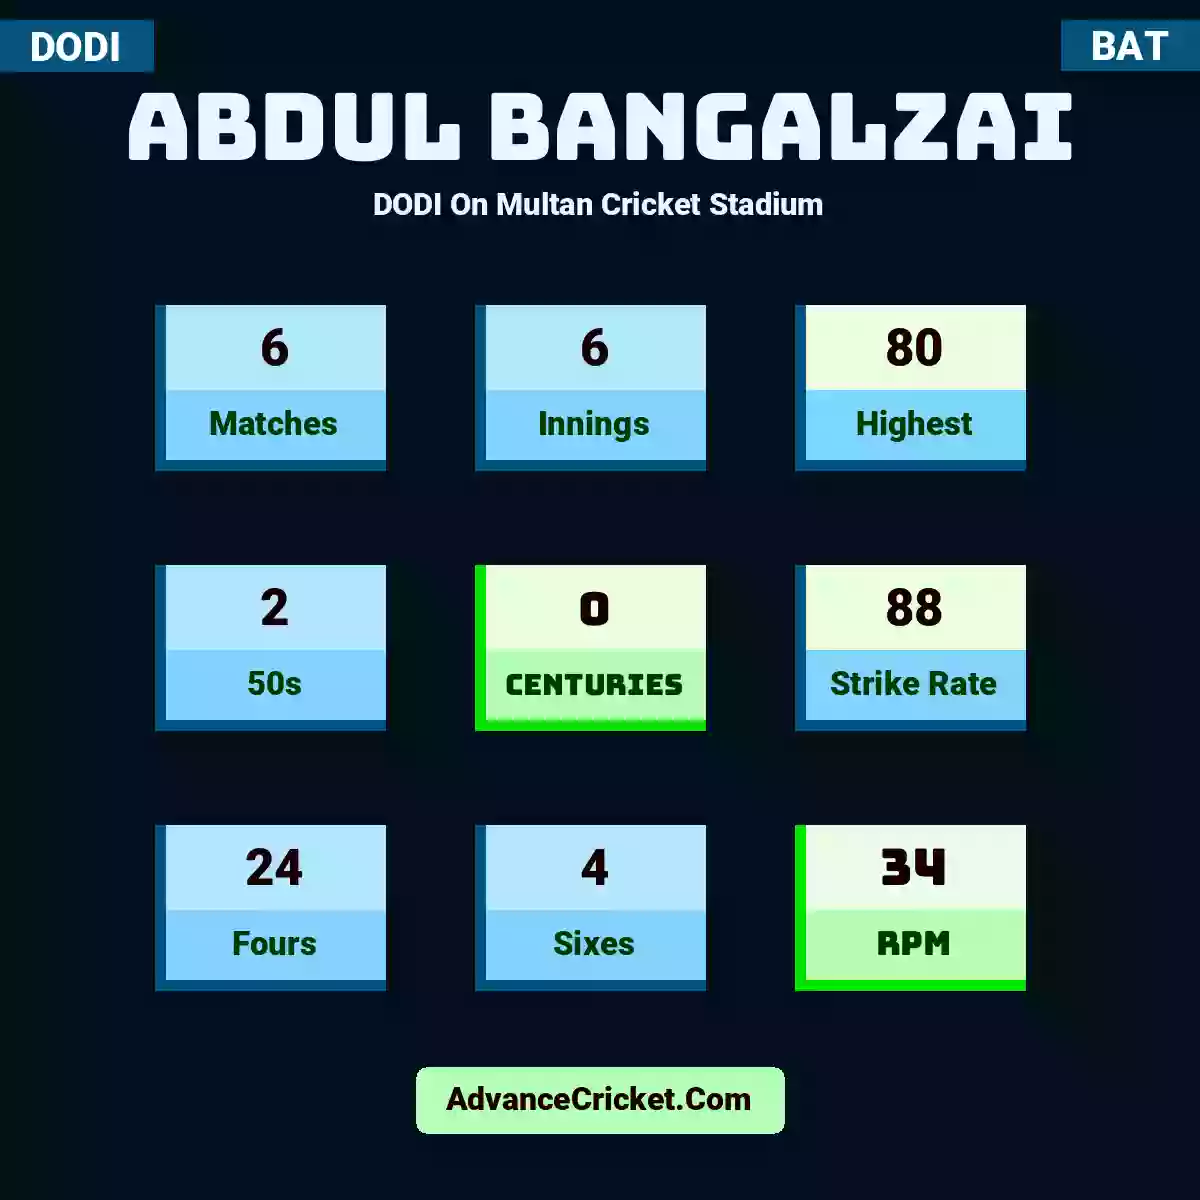 Abdul Bangalzai DODI  On Multan Cricket Stadium, Abdul Bangalzai played 6 matches, scored 80 runs as highest, 2 half-centuries, and 0 centuries, with a strike rate of 88. A.Bangalzai hit 24 fours and 4 sixes, with an RPM of 34.